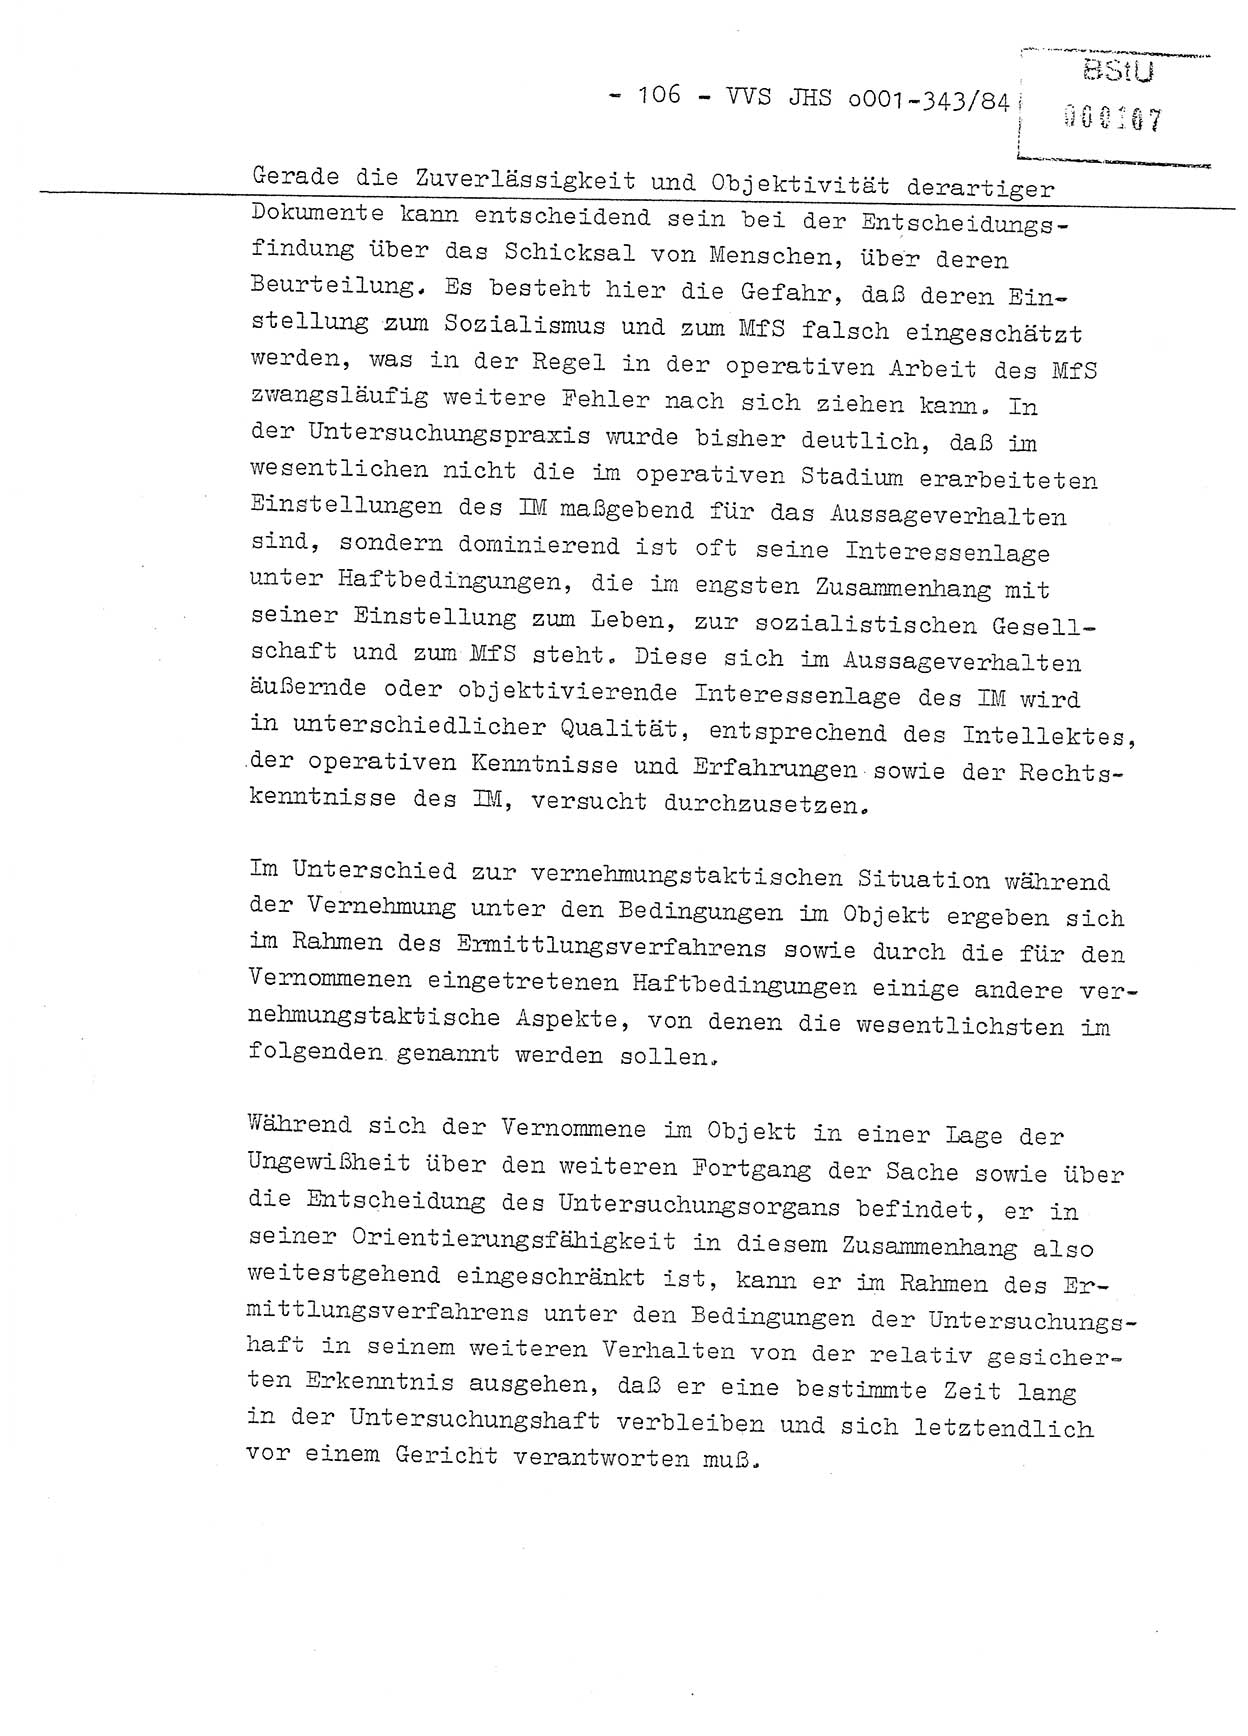 Diplomarbeit, Oberleutnant Bernd Michael (HA Ⅸ/5), Oberleutnant Peter Felber (HA IX/5), Ministerium für Staatssicherheit (MfS) [Deutsche Demokratische Republik (DDR)], Juristische Hochschule (JHS), Vertrauliche Verschlußsache (VVS) o001-343/84, Potsdam 1985, Seite 106 (Dipl.-Arb. MfS DDR JHS VVS o001-343/84 1985, S. 106)